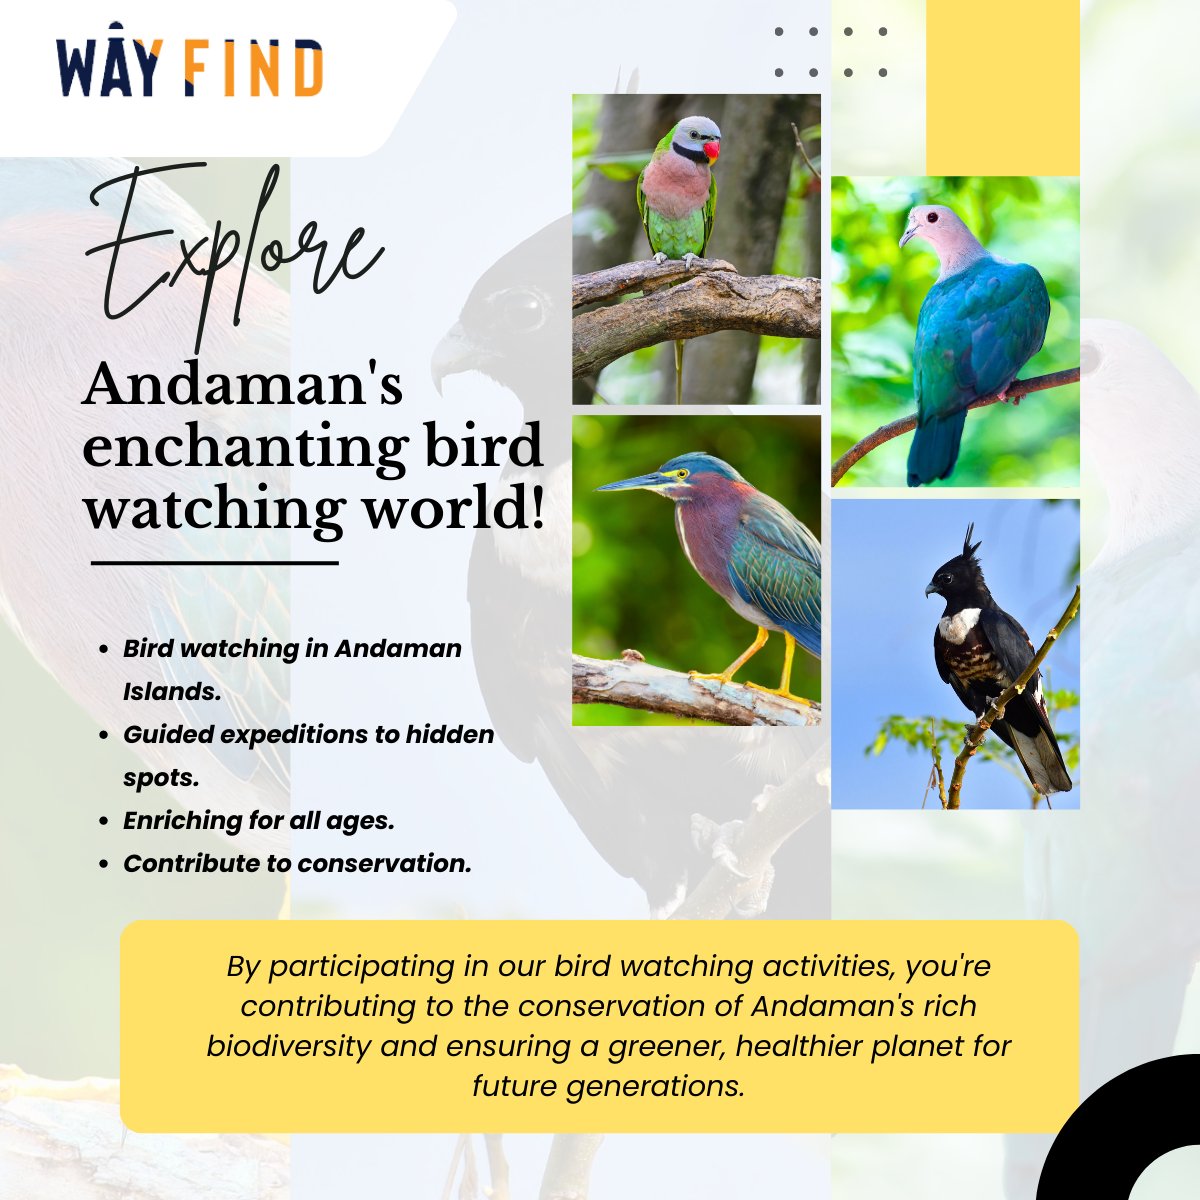 Discover Andaman's Birdwatching Bliss 🐦🌴
Guided expeditions, Enriching experiences, Conservation efforts 🌿📸
.
.
.
.
.
.
.
.

#BirdWatchingAndaman
#AndamanBirding
#BirdingAndaman
#BirdsOfAndaman
#AndamanBirds
#BirdWatchingIndia
#WildlifeAndaman
#BirdsAndamanIslands